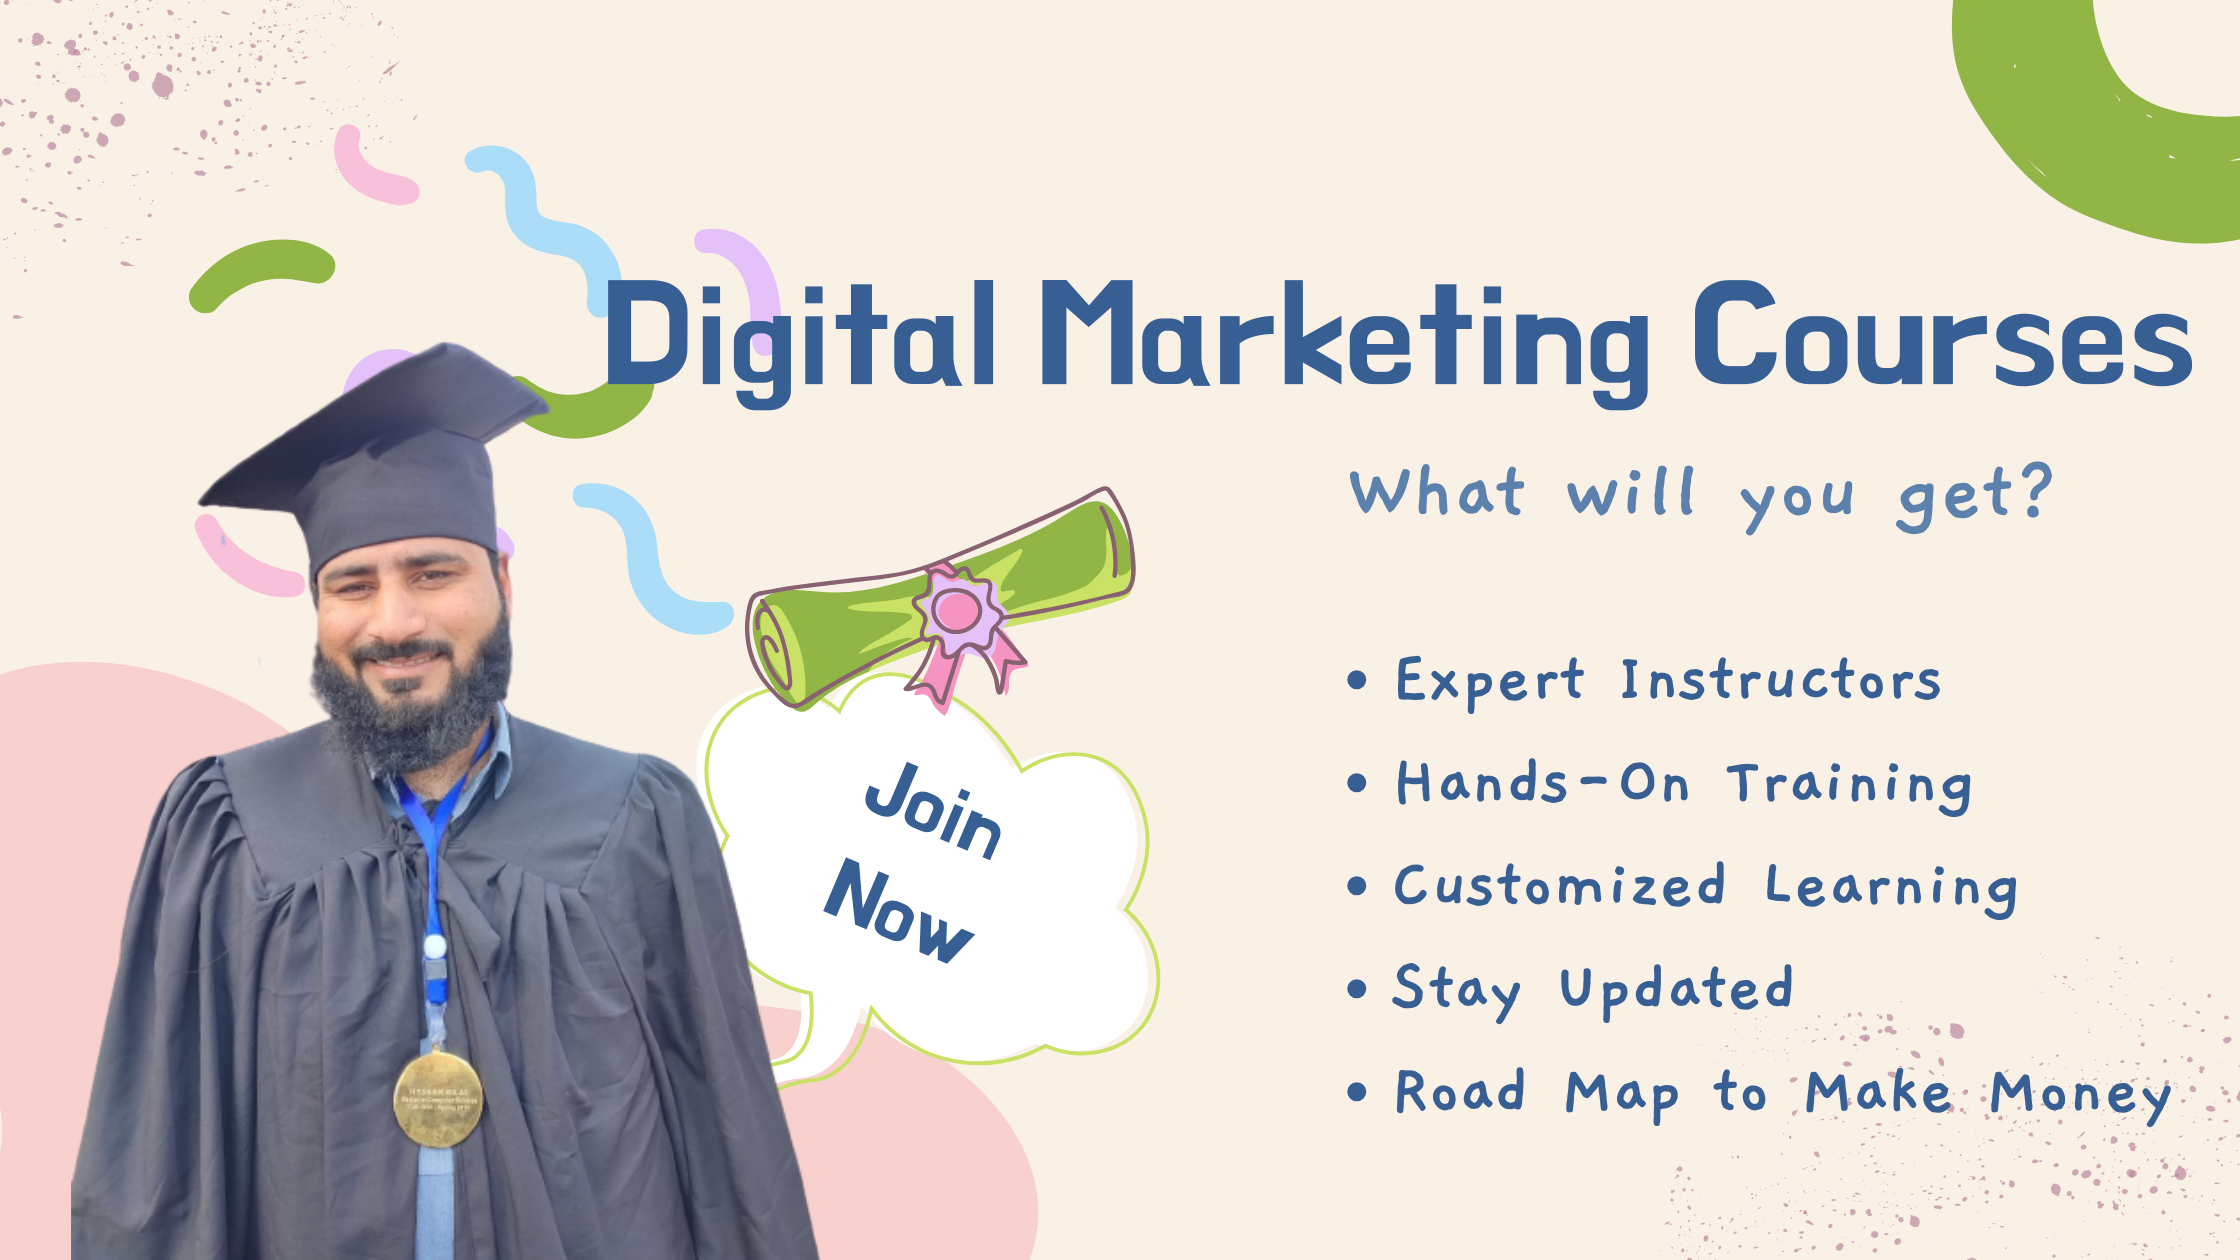 Digital Marketing Courses in Islamabad